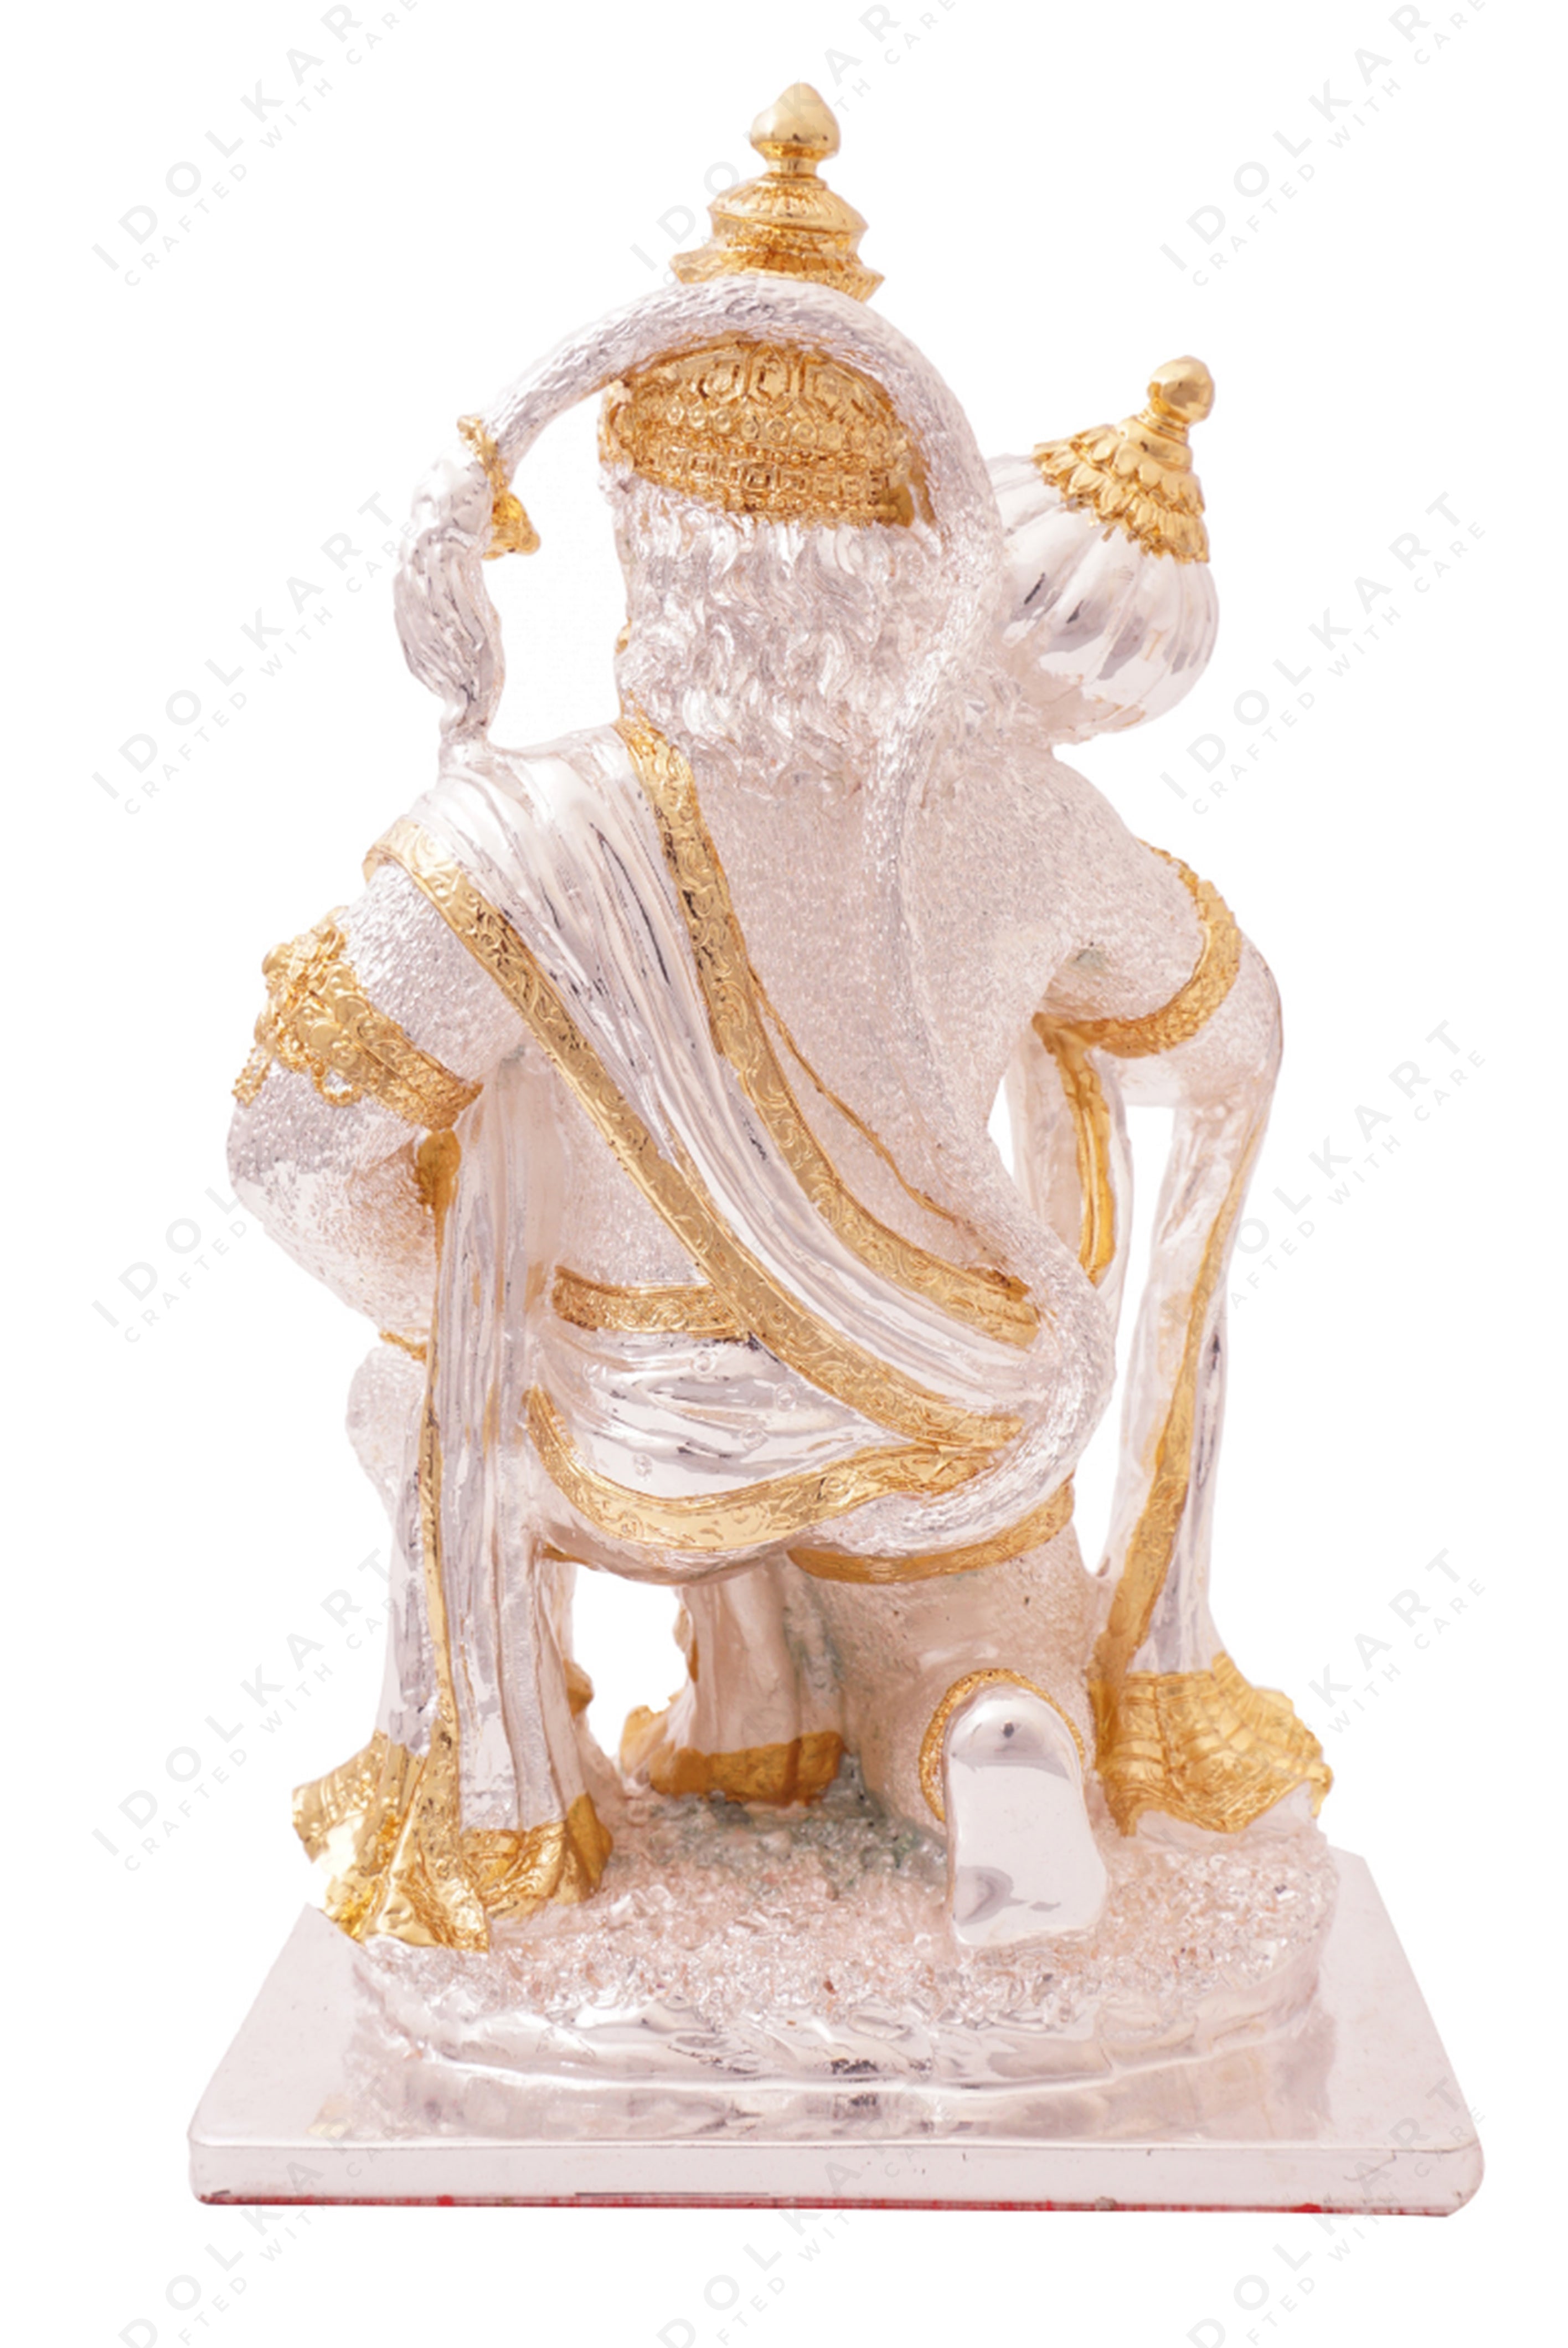 8 inch Pure Gold and Silver coated Hanuman Idol for Home Decor | Bajrangbali Murti for Mandir | Sitting Hanuman Murti with Hanuman Gada for Home Decor Office | Bajranbali Murti | Pure Gold Gifts for Diwali, House Warming, Wedding Gift